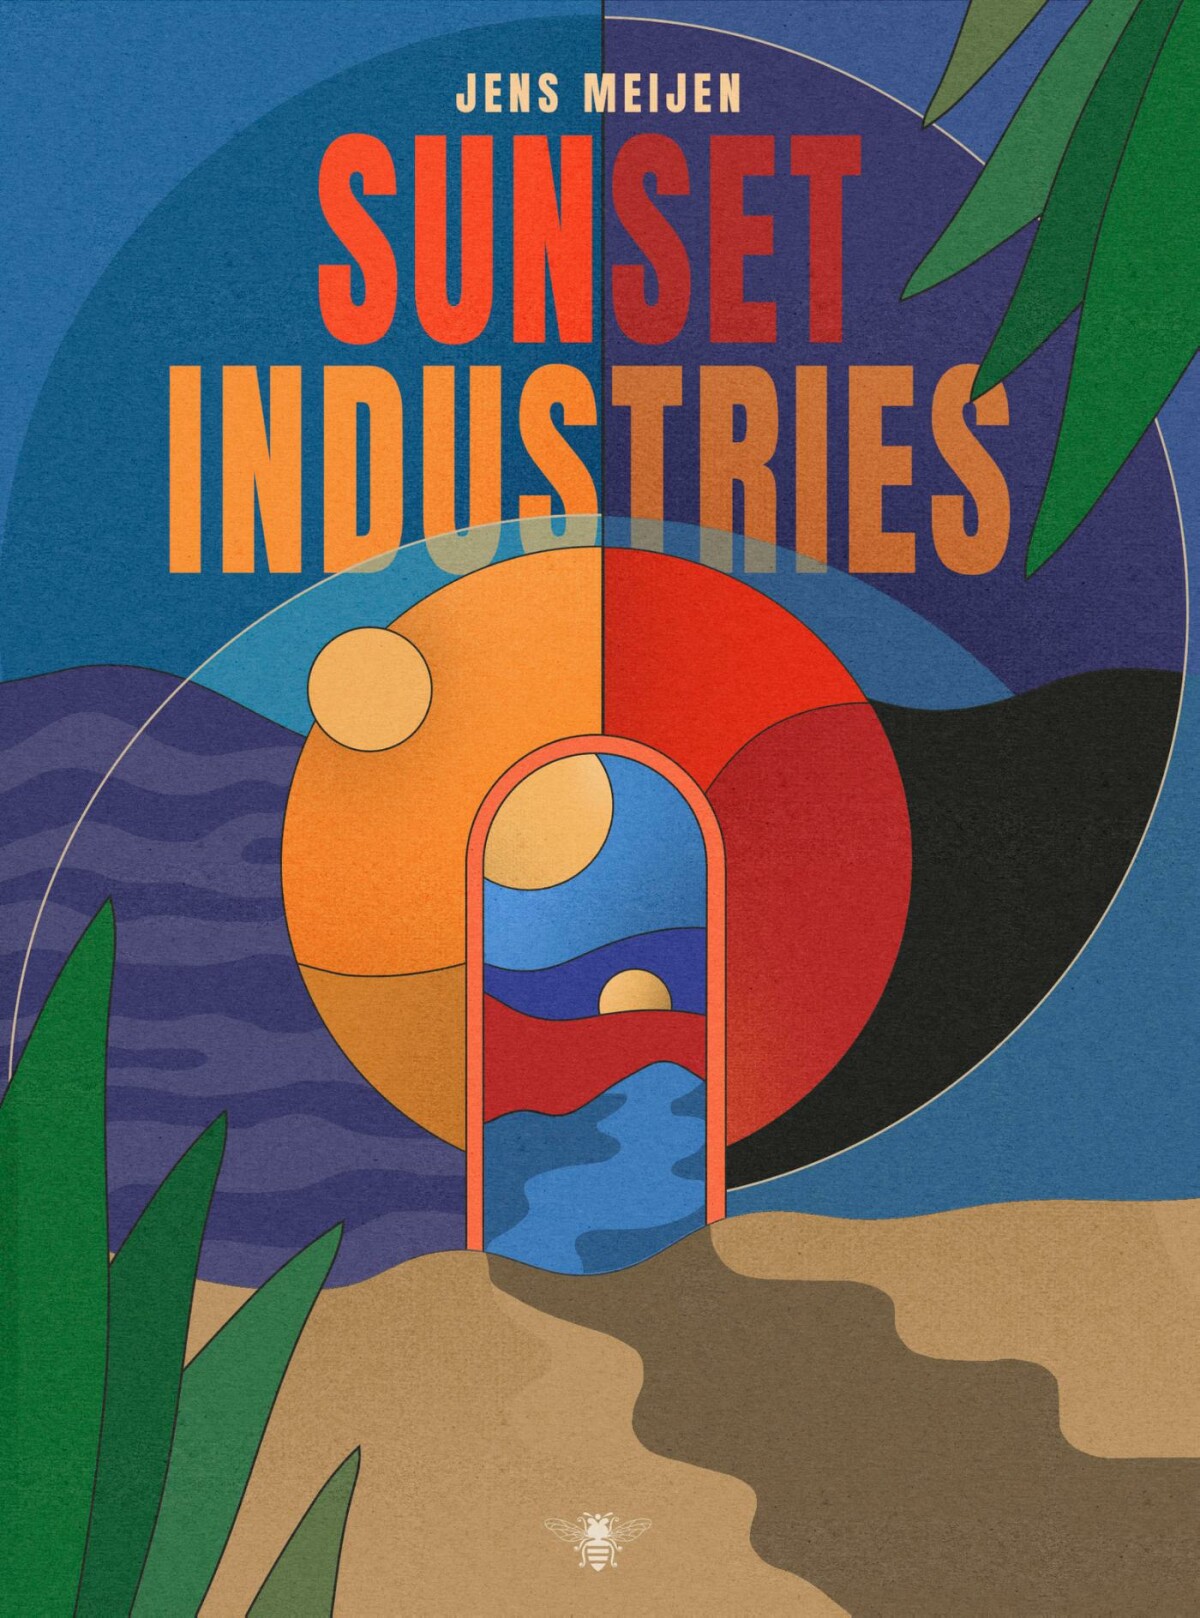 Sunset industries